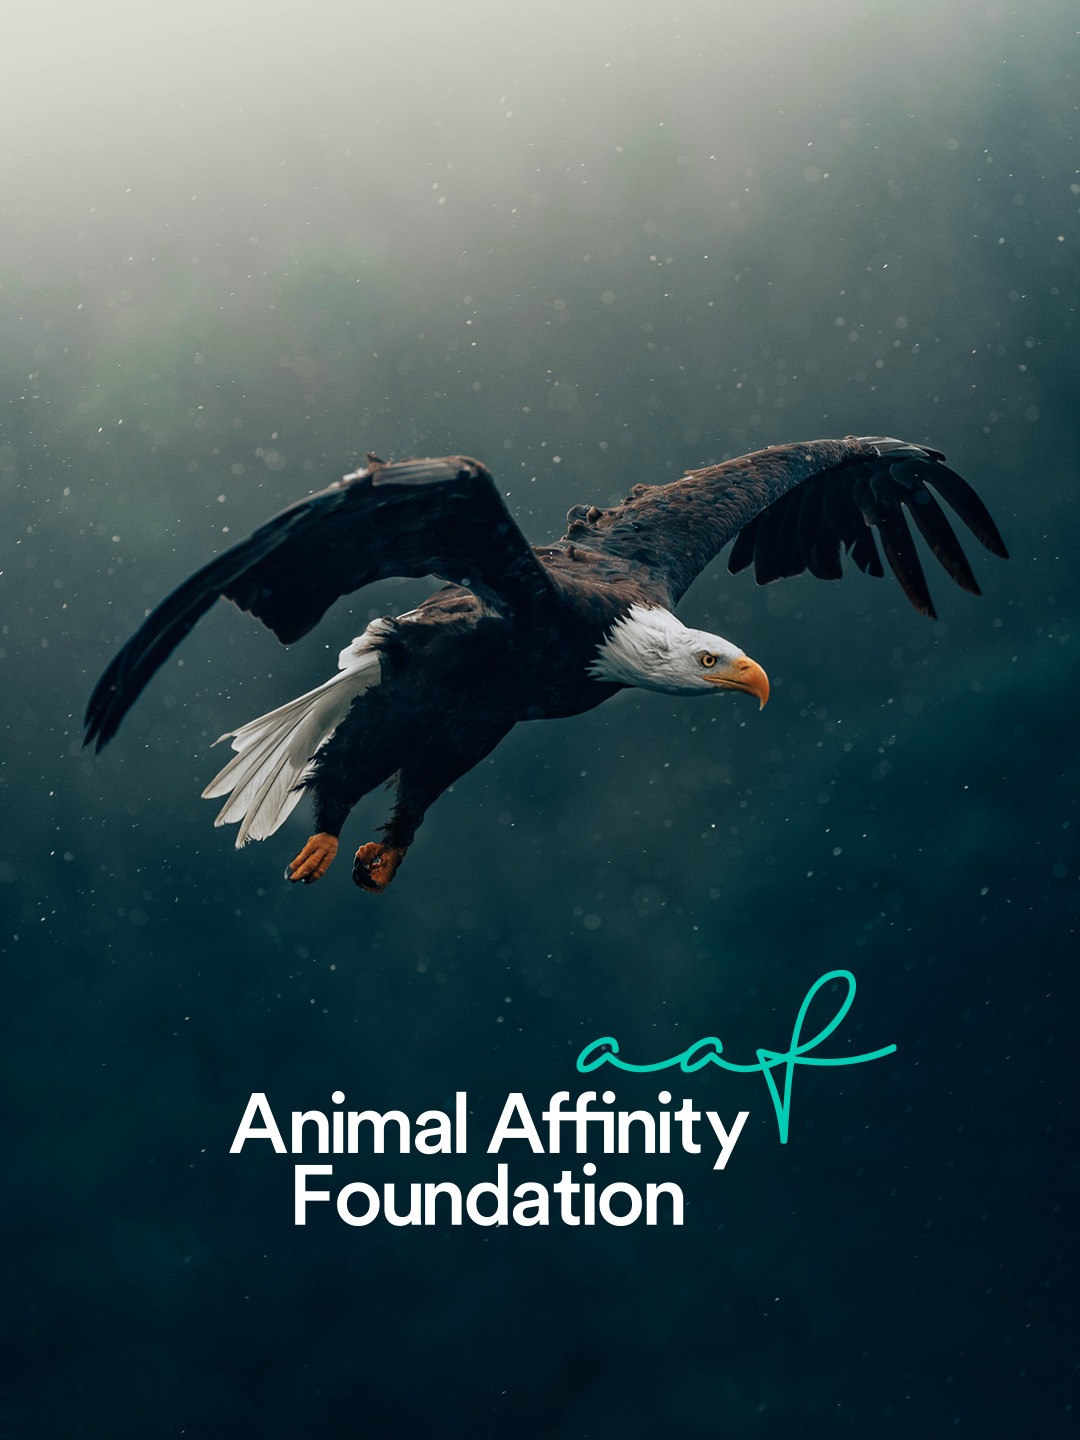 Animal Affinity logo design concept beneath a bald eagle.